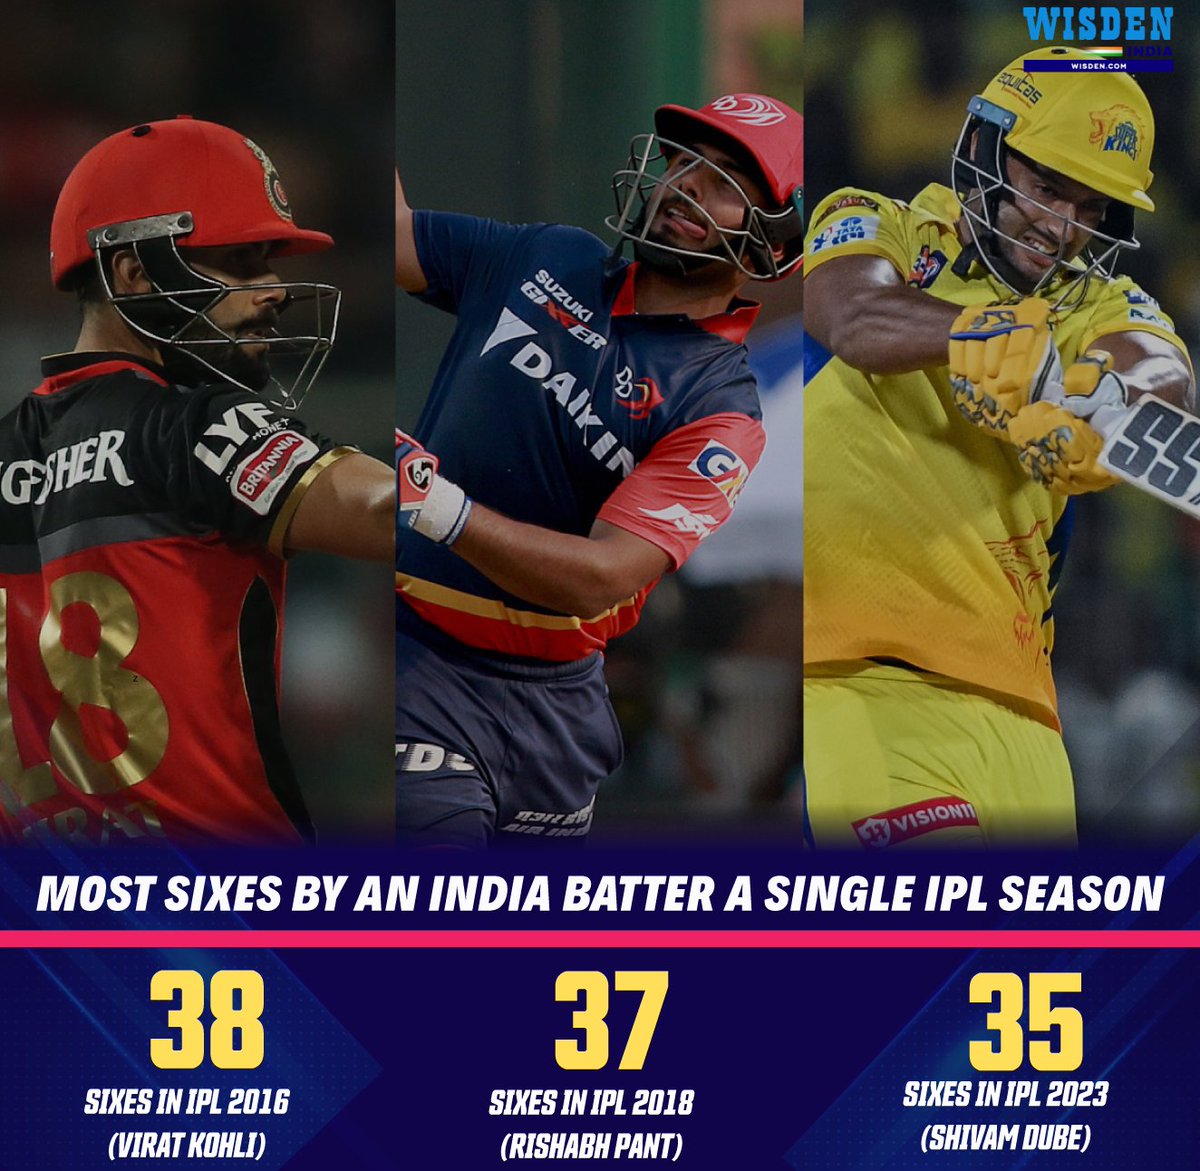 Virat Kohli in IPL 2016 ✅
Rishabh Pant in IPL 2018 ✅
Shivam Dube in IPL 2023 ✅

India batters with the most sixes in a single IPL season 🔥

#ViratKohli #RishabhPant #ShivamDube #IPL2024 #Cricket